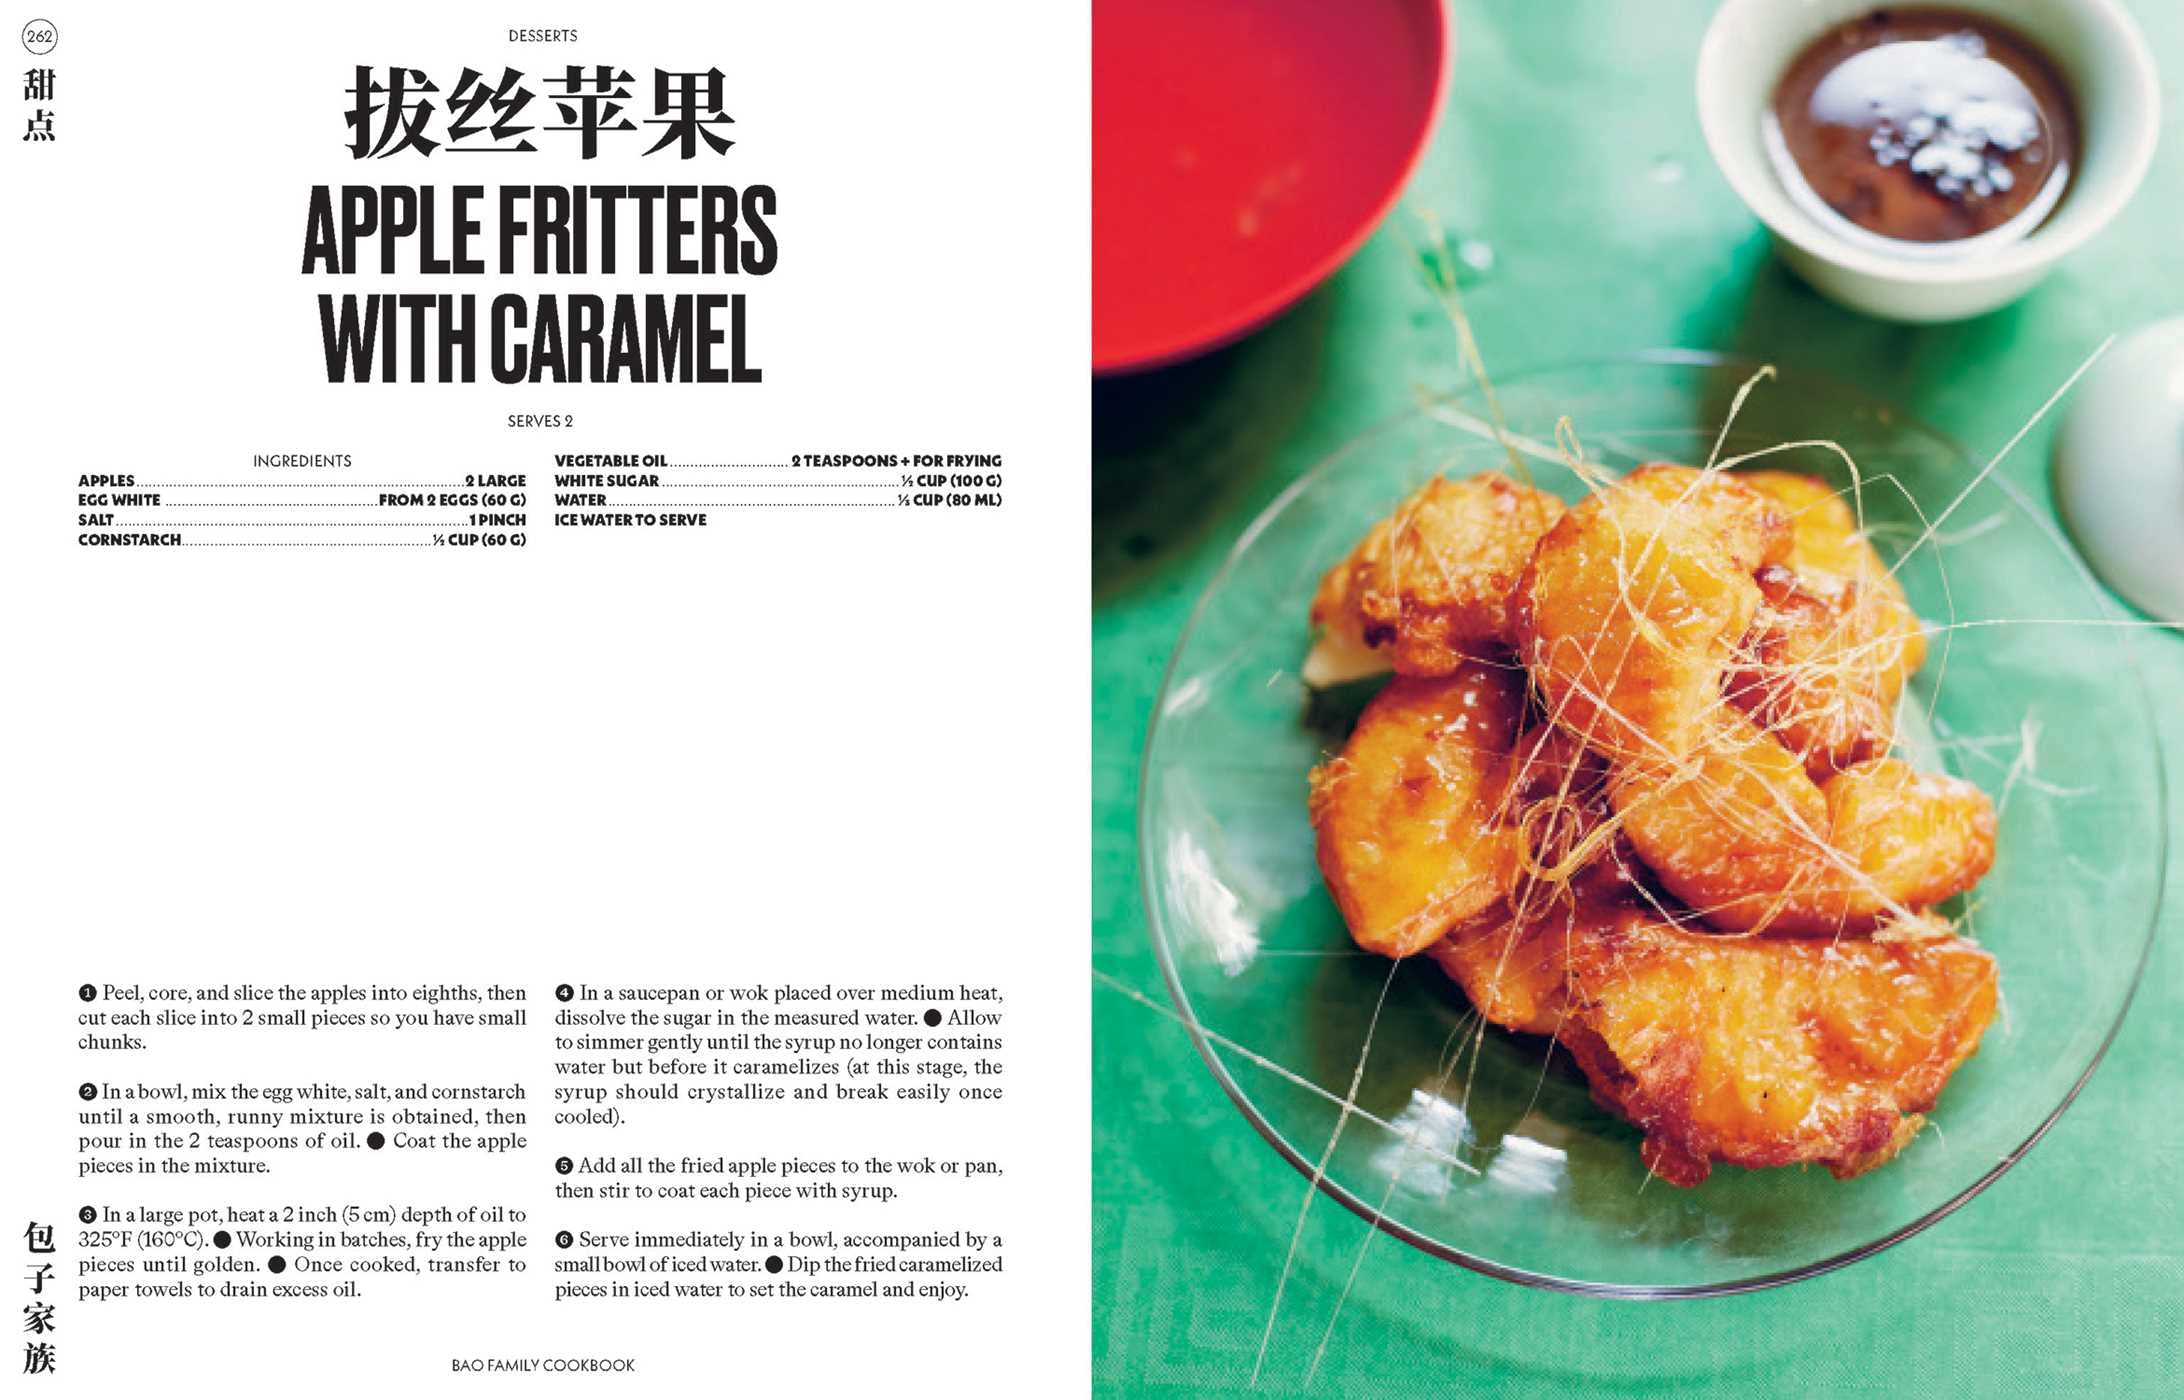 Bao Family Cookbook: Recipes from the Eight Culinary Regions of China (Céline Chung, Grégoire Kalt)